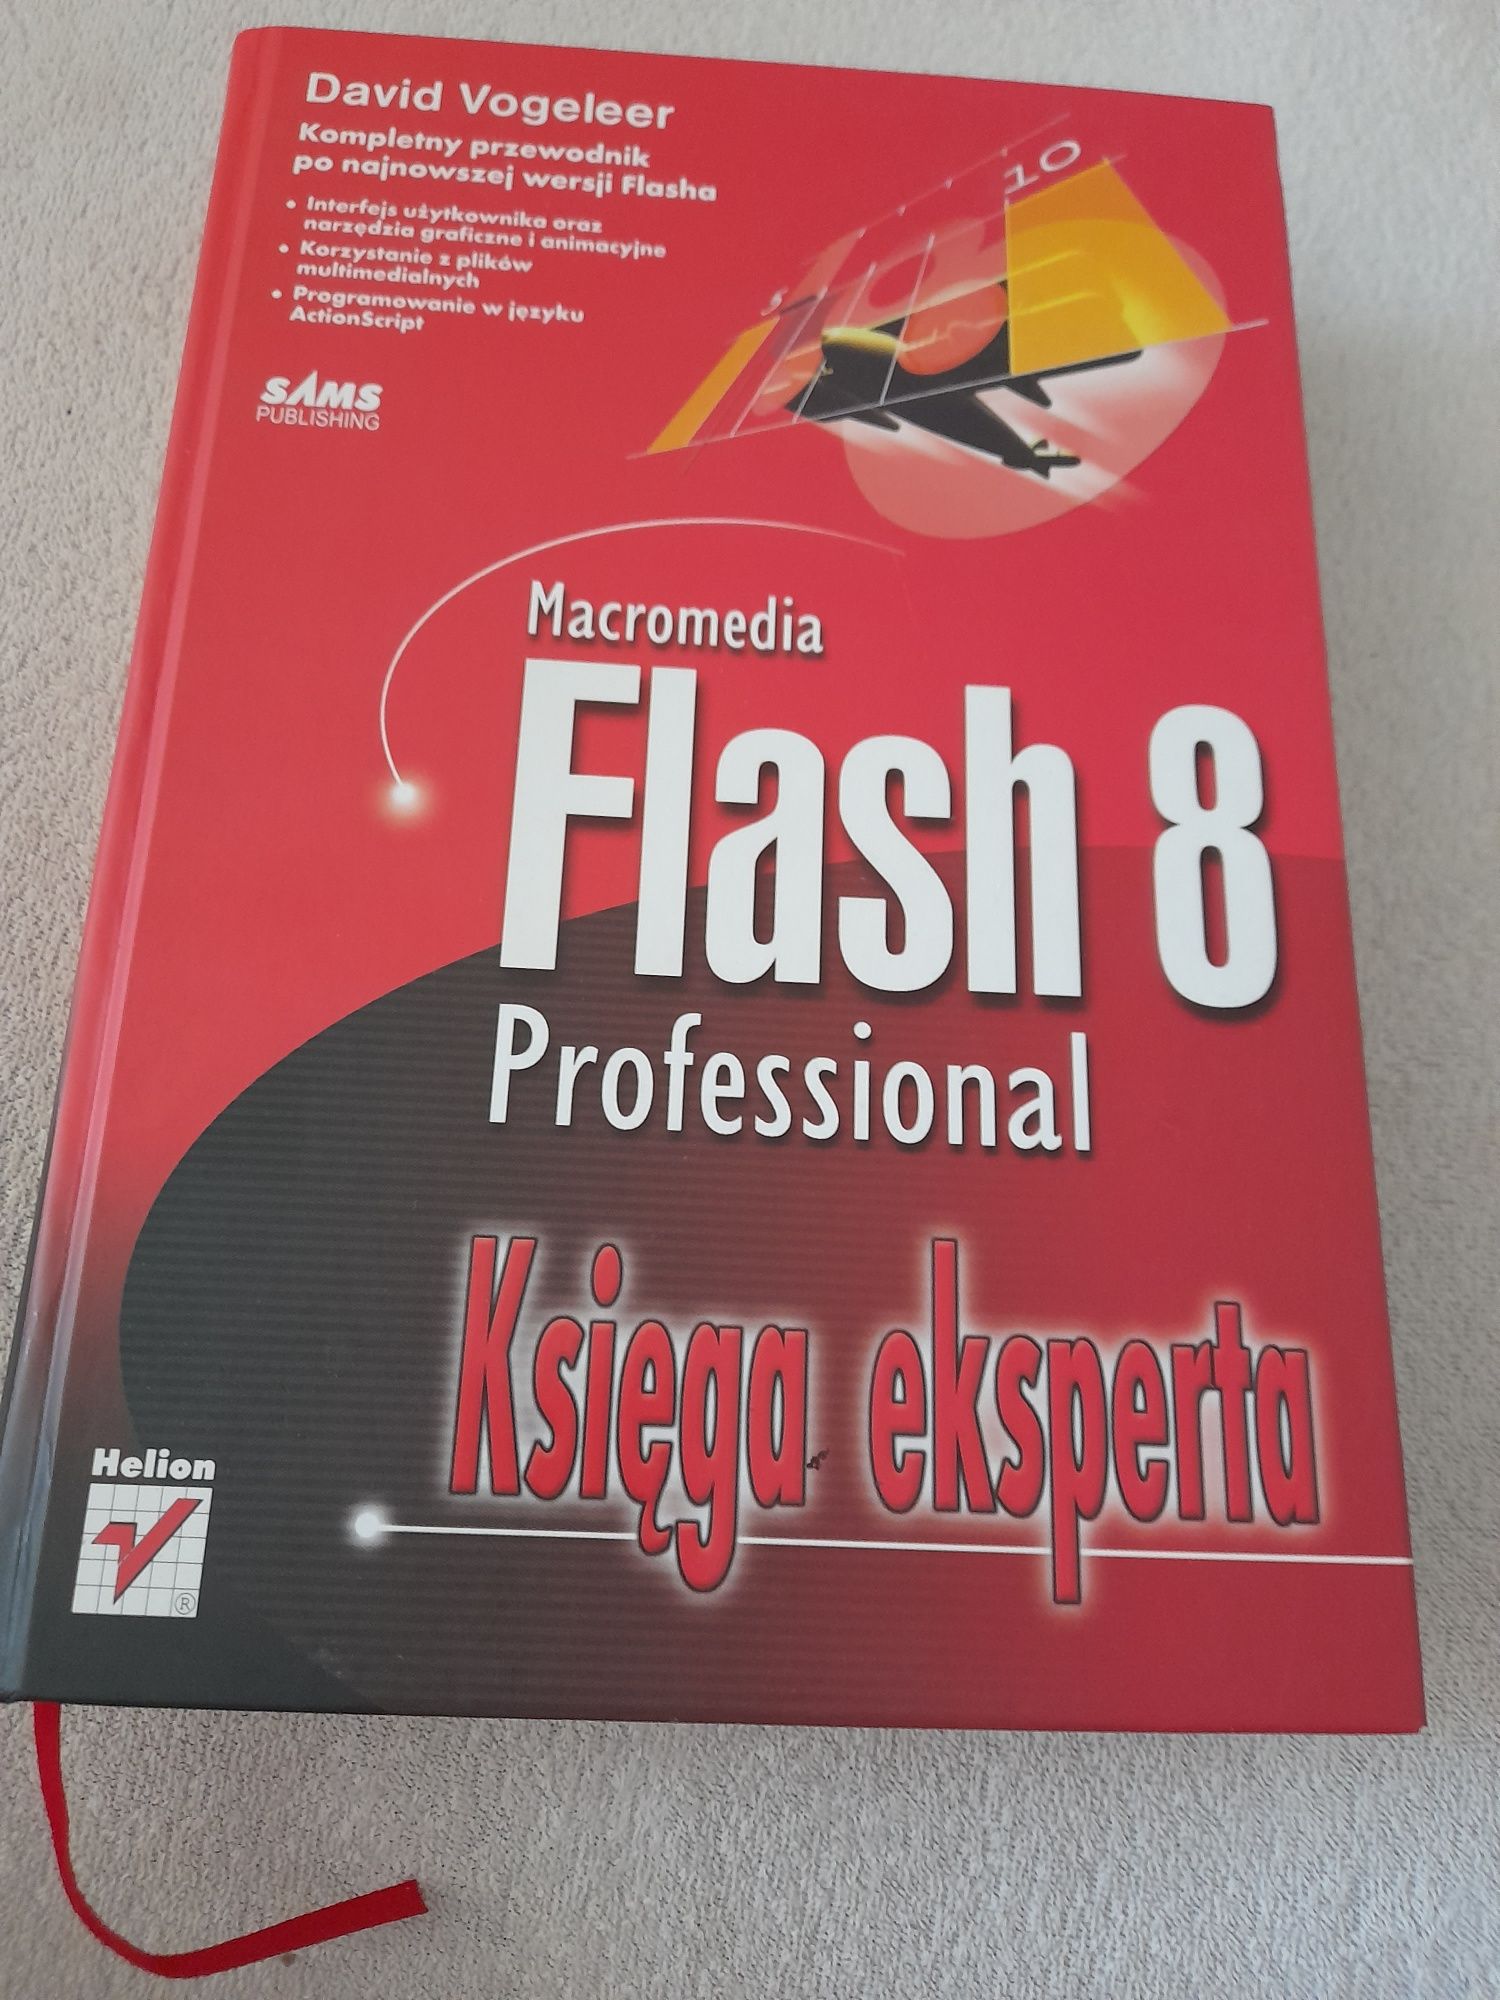 Macromedia Flash 8 Professional 2006 r